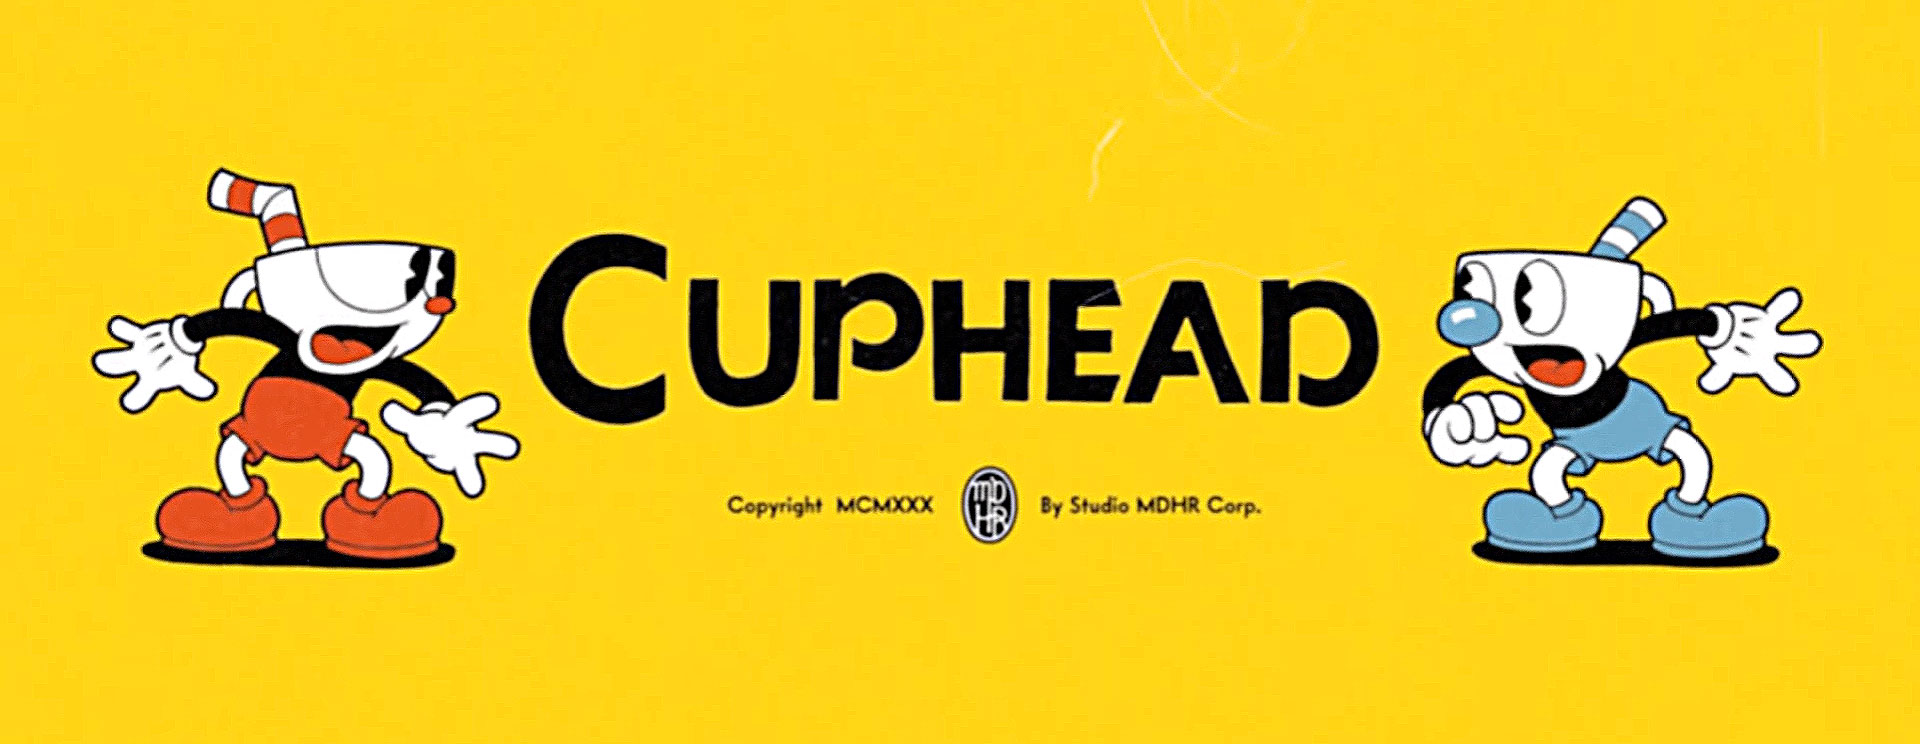 Cuphead ha venduto 3 milioni di copie